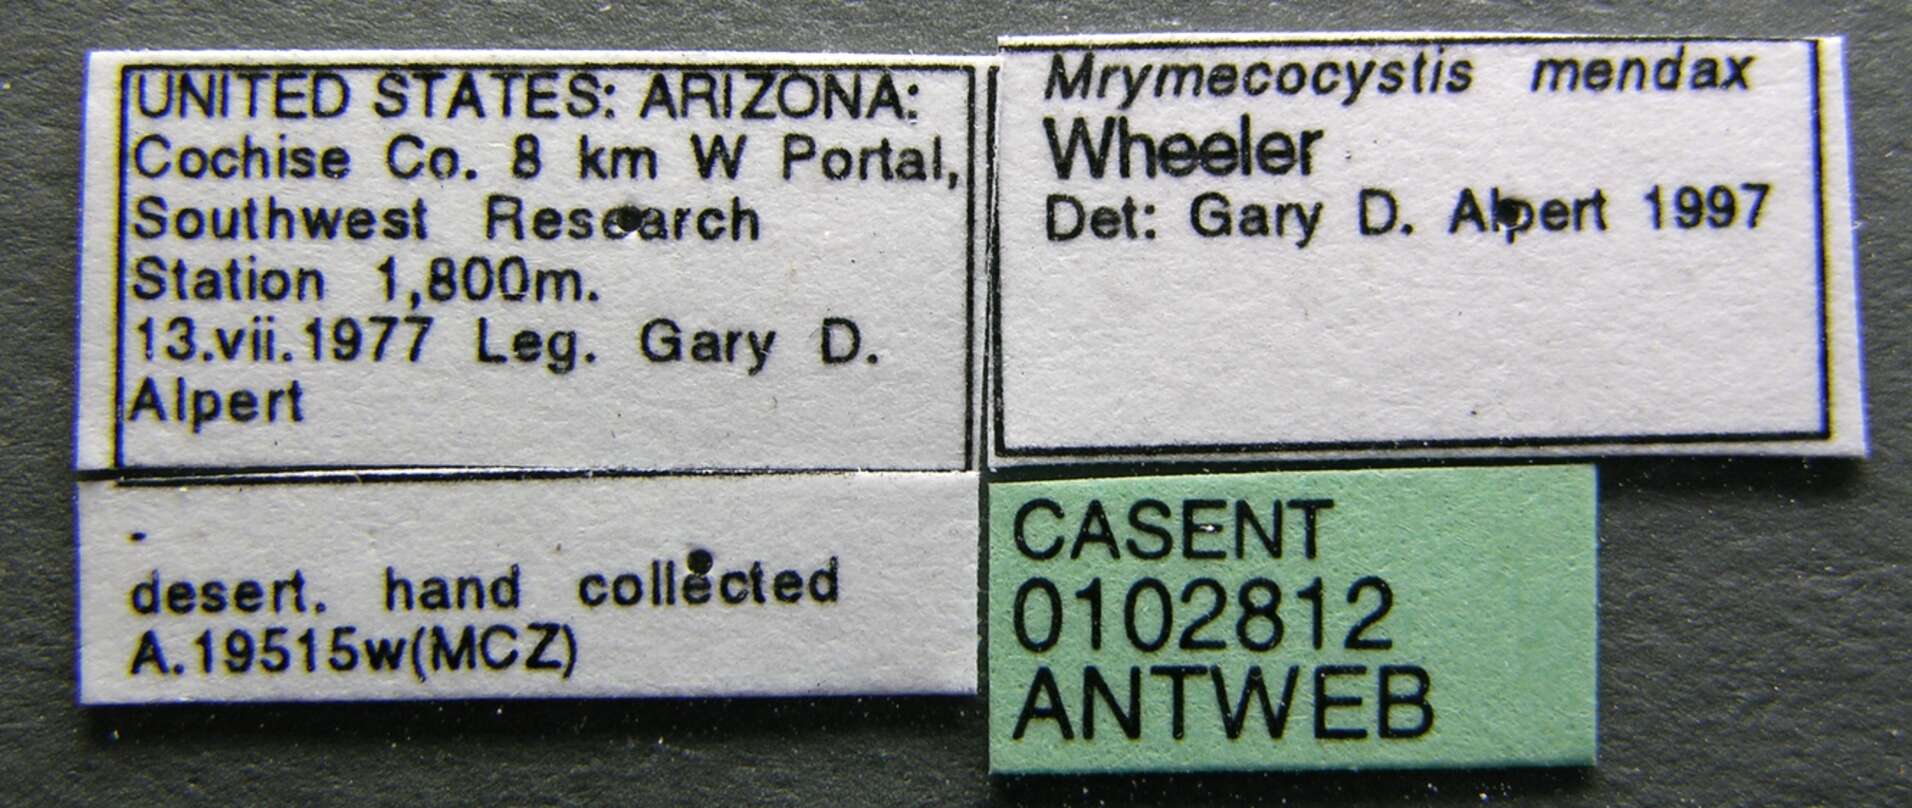 Image of Myrmecocystus mendax Wheeler 1908